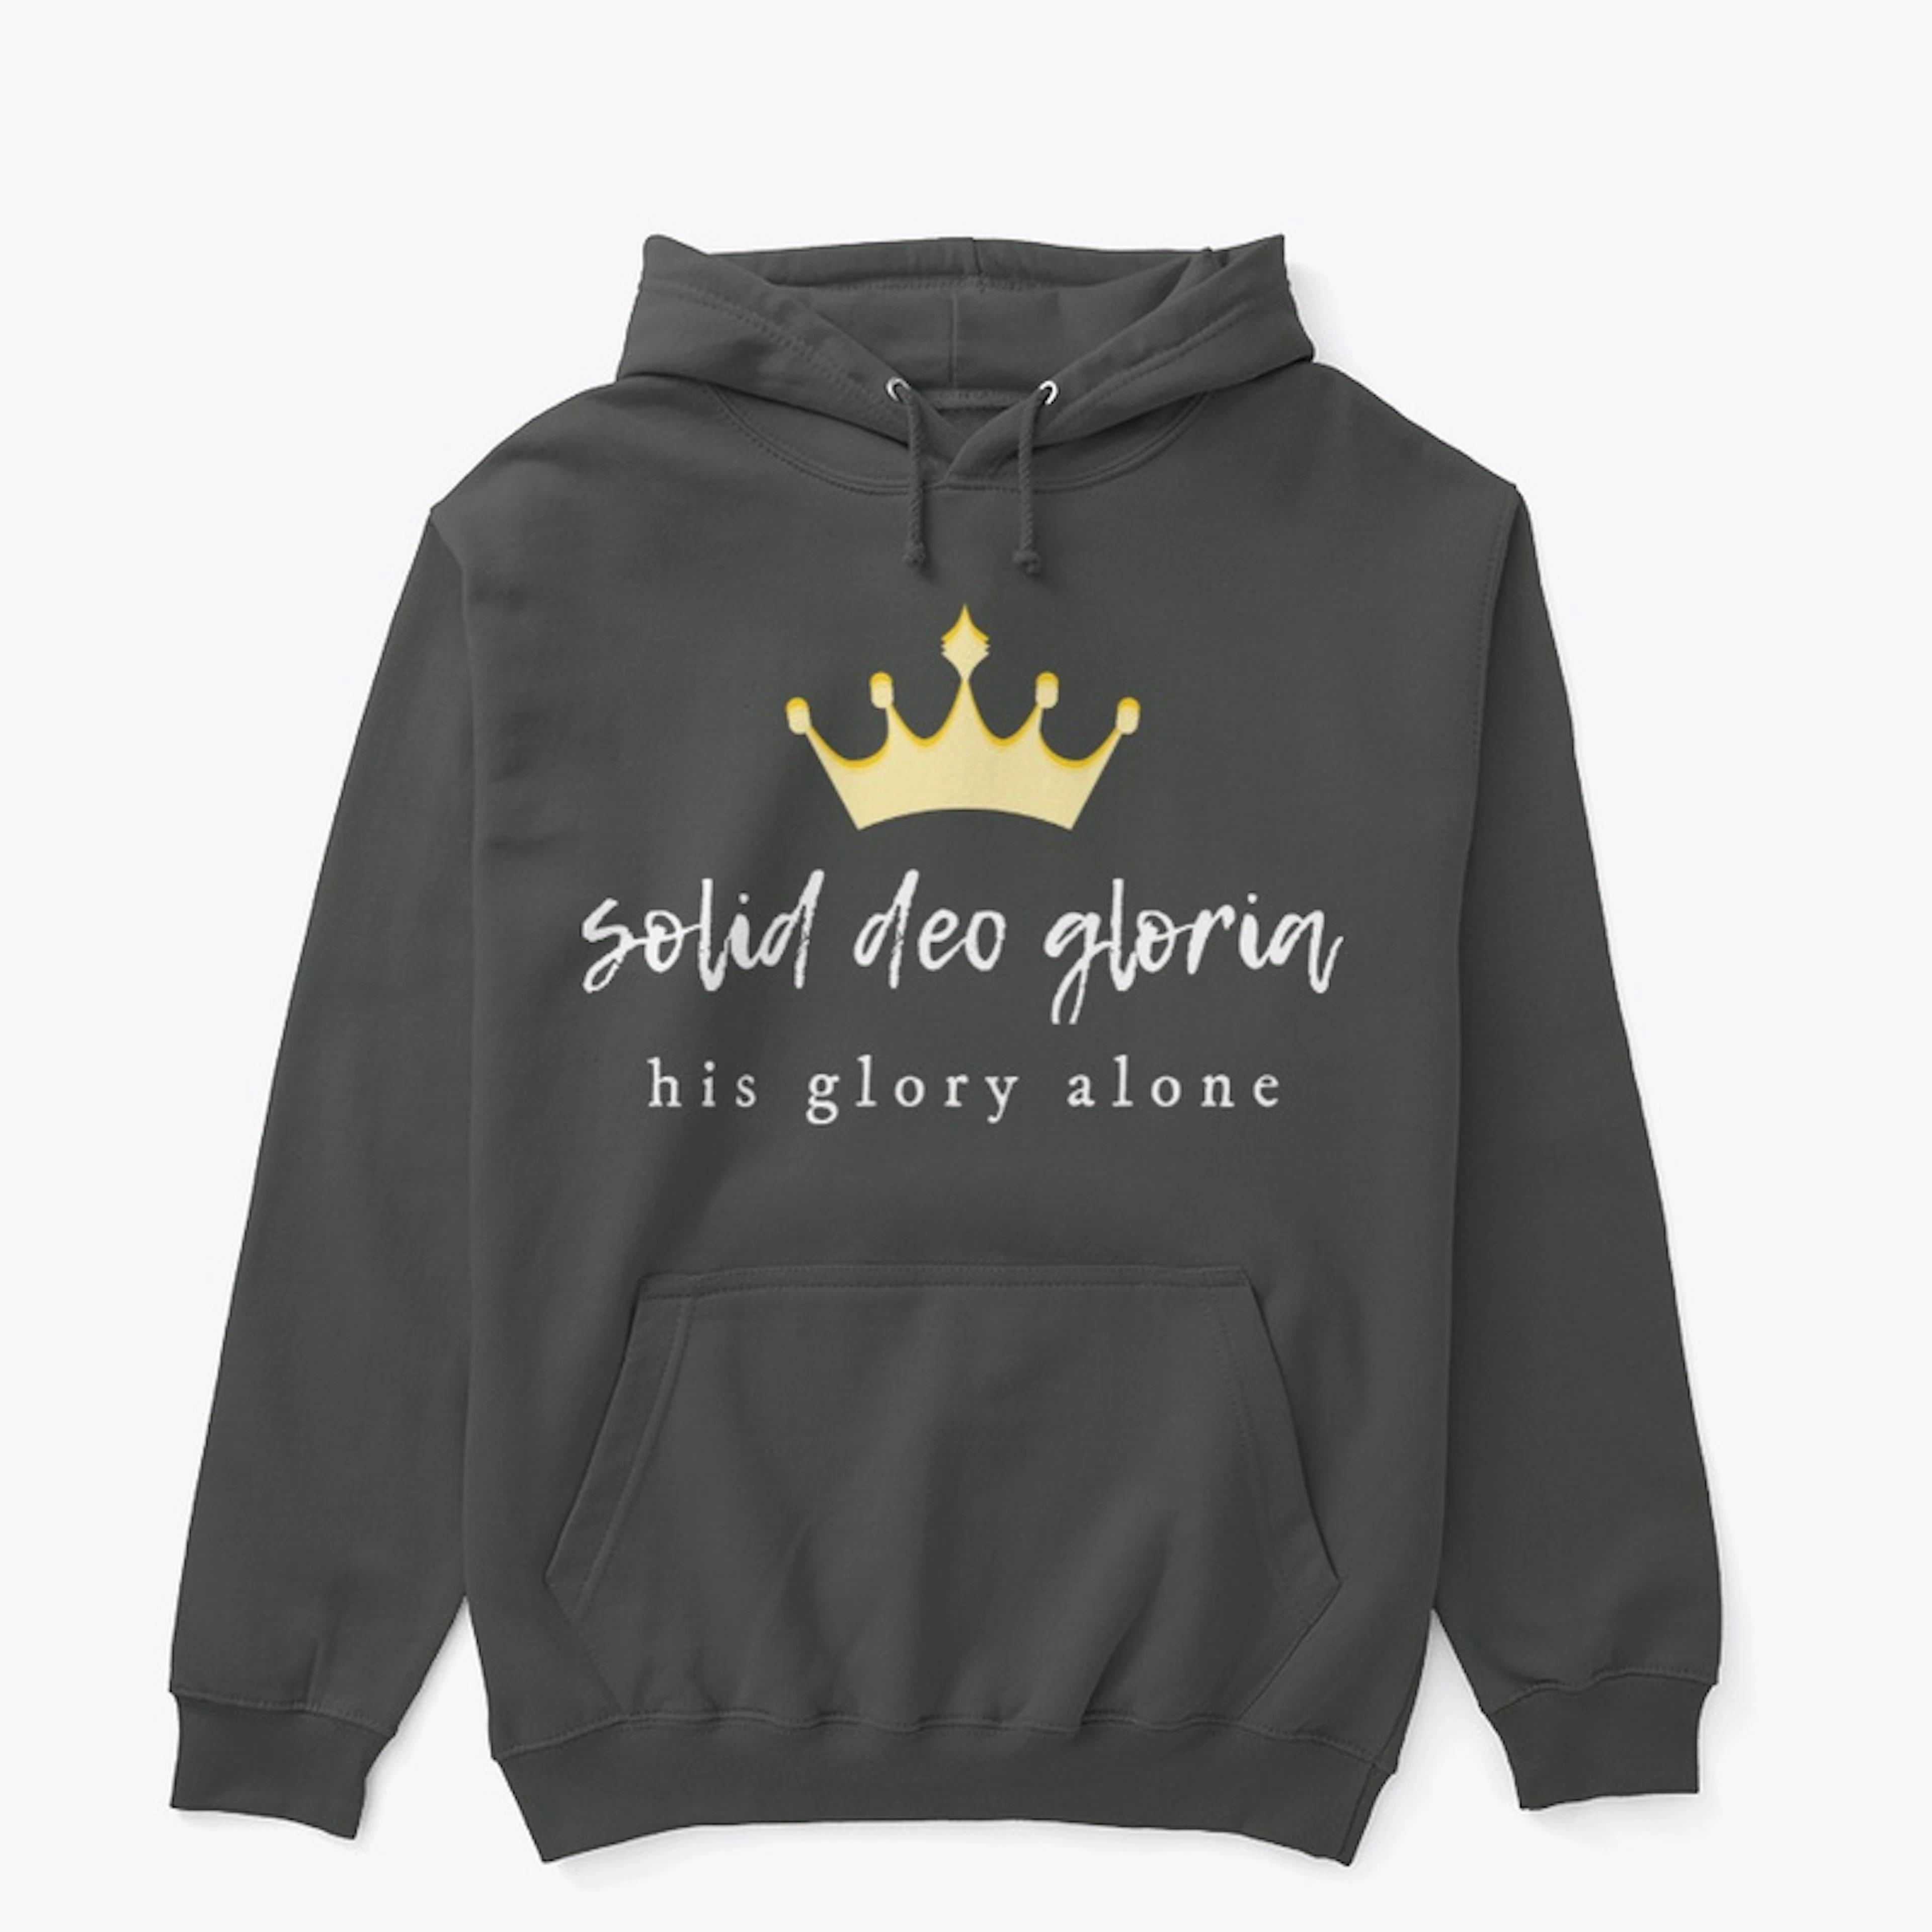 Soli Deo Gloria - Glory of God Alone